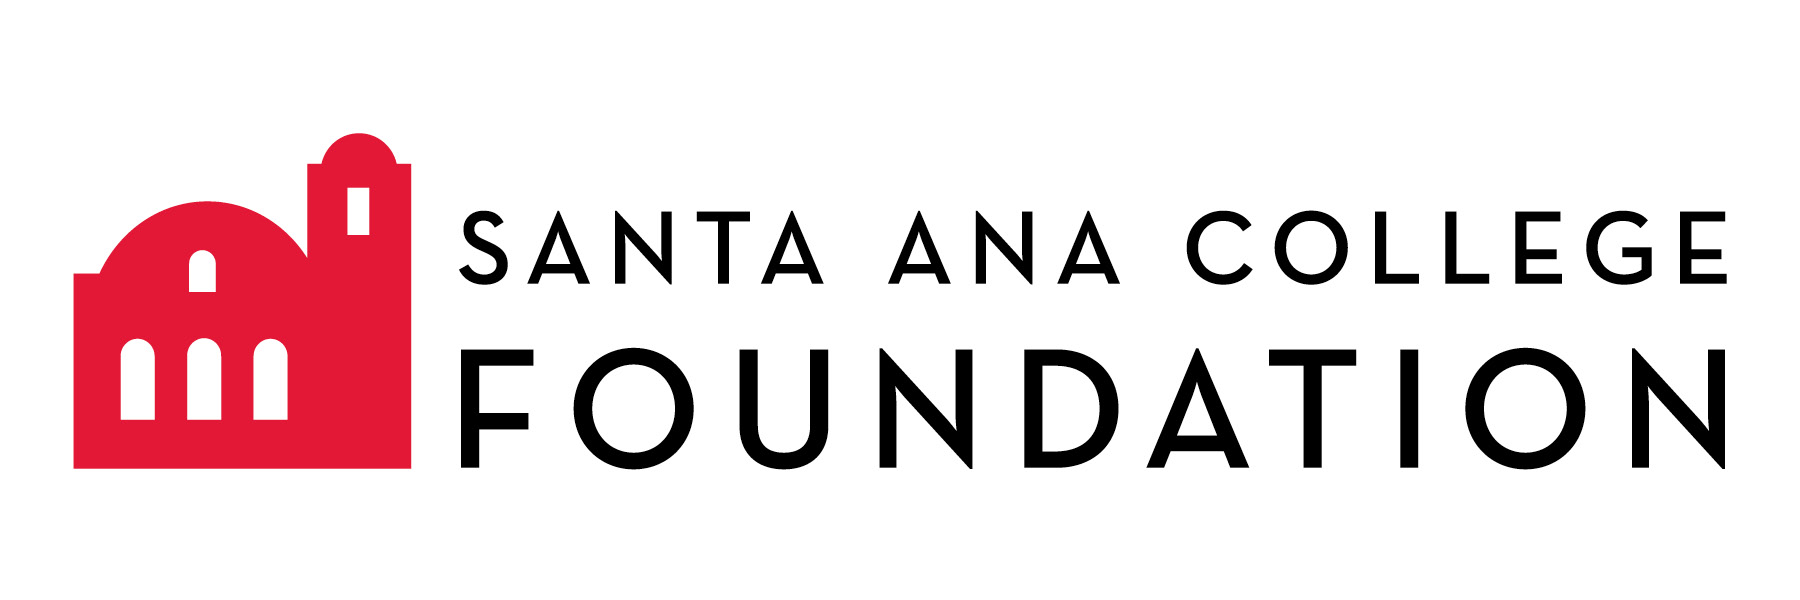 SAC Foundation logo